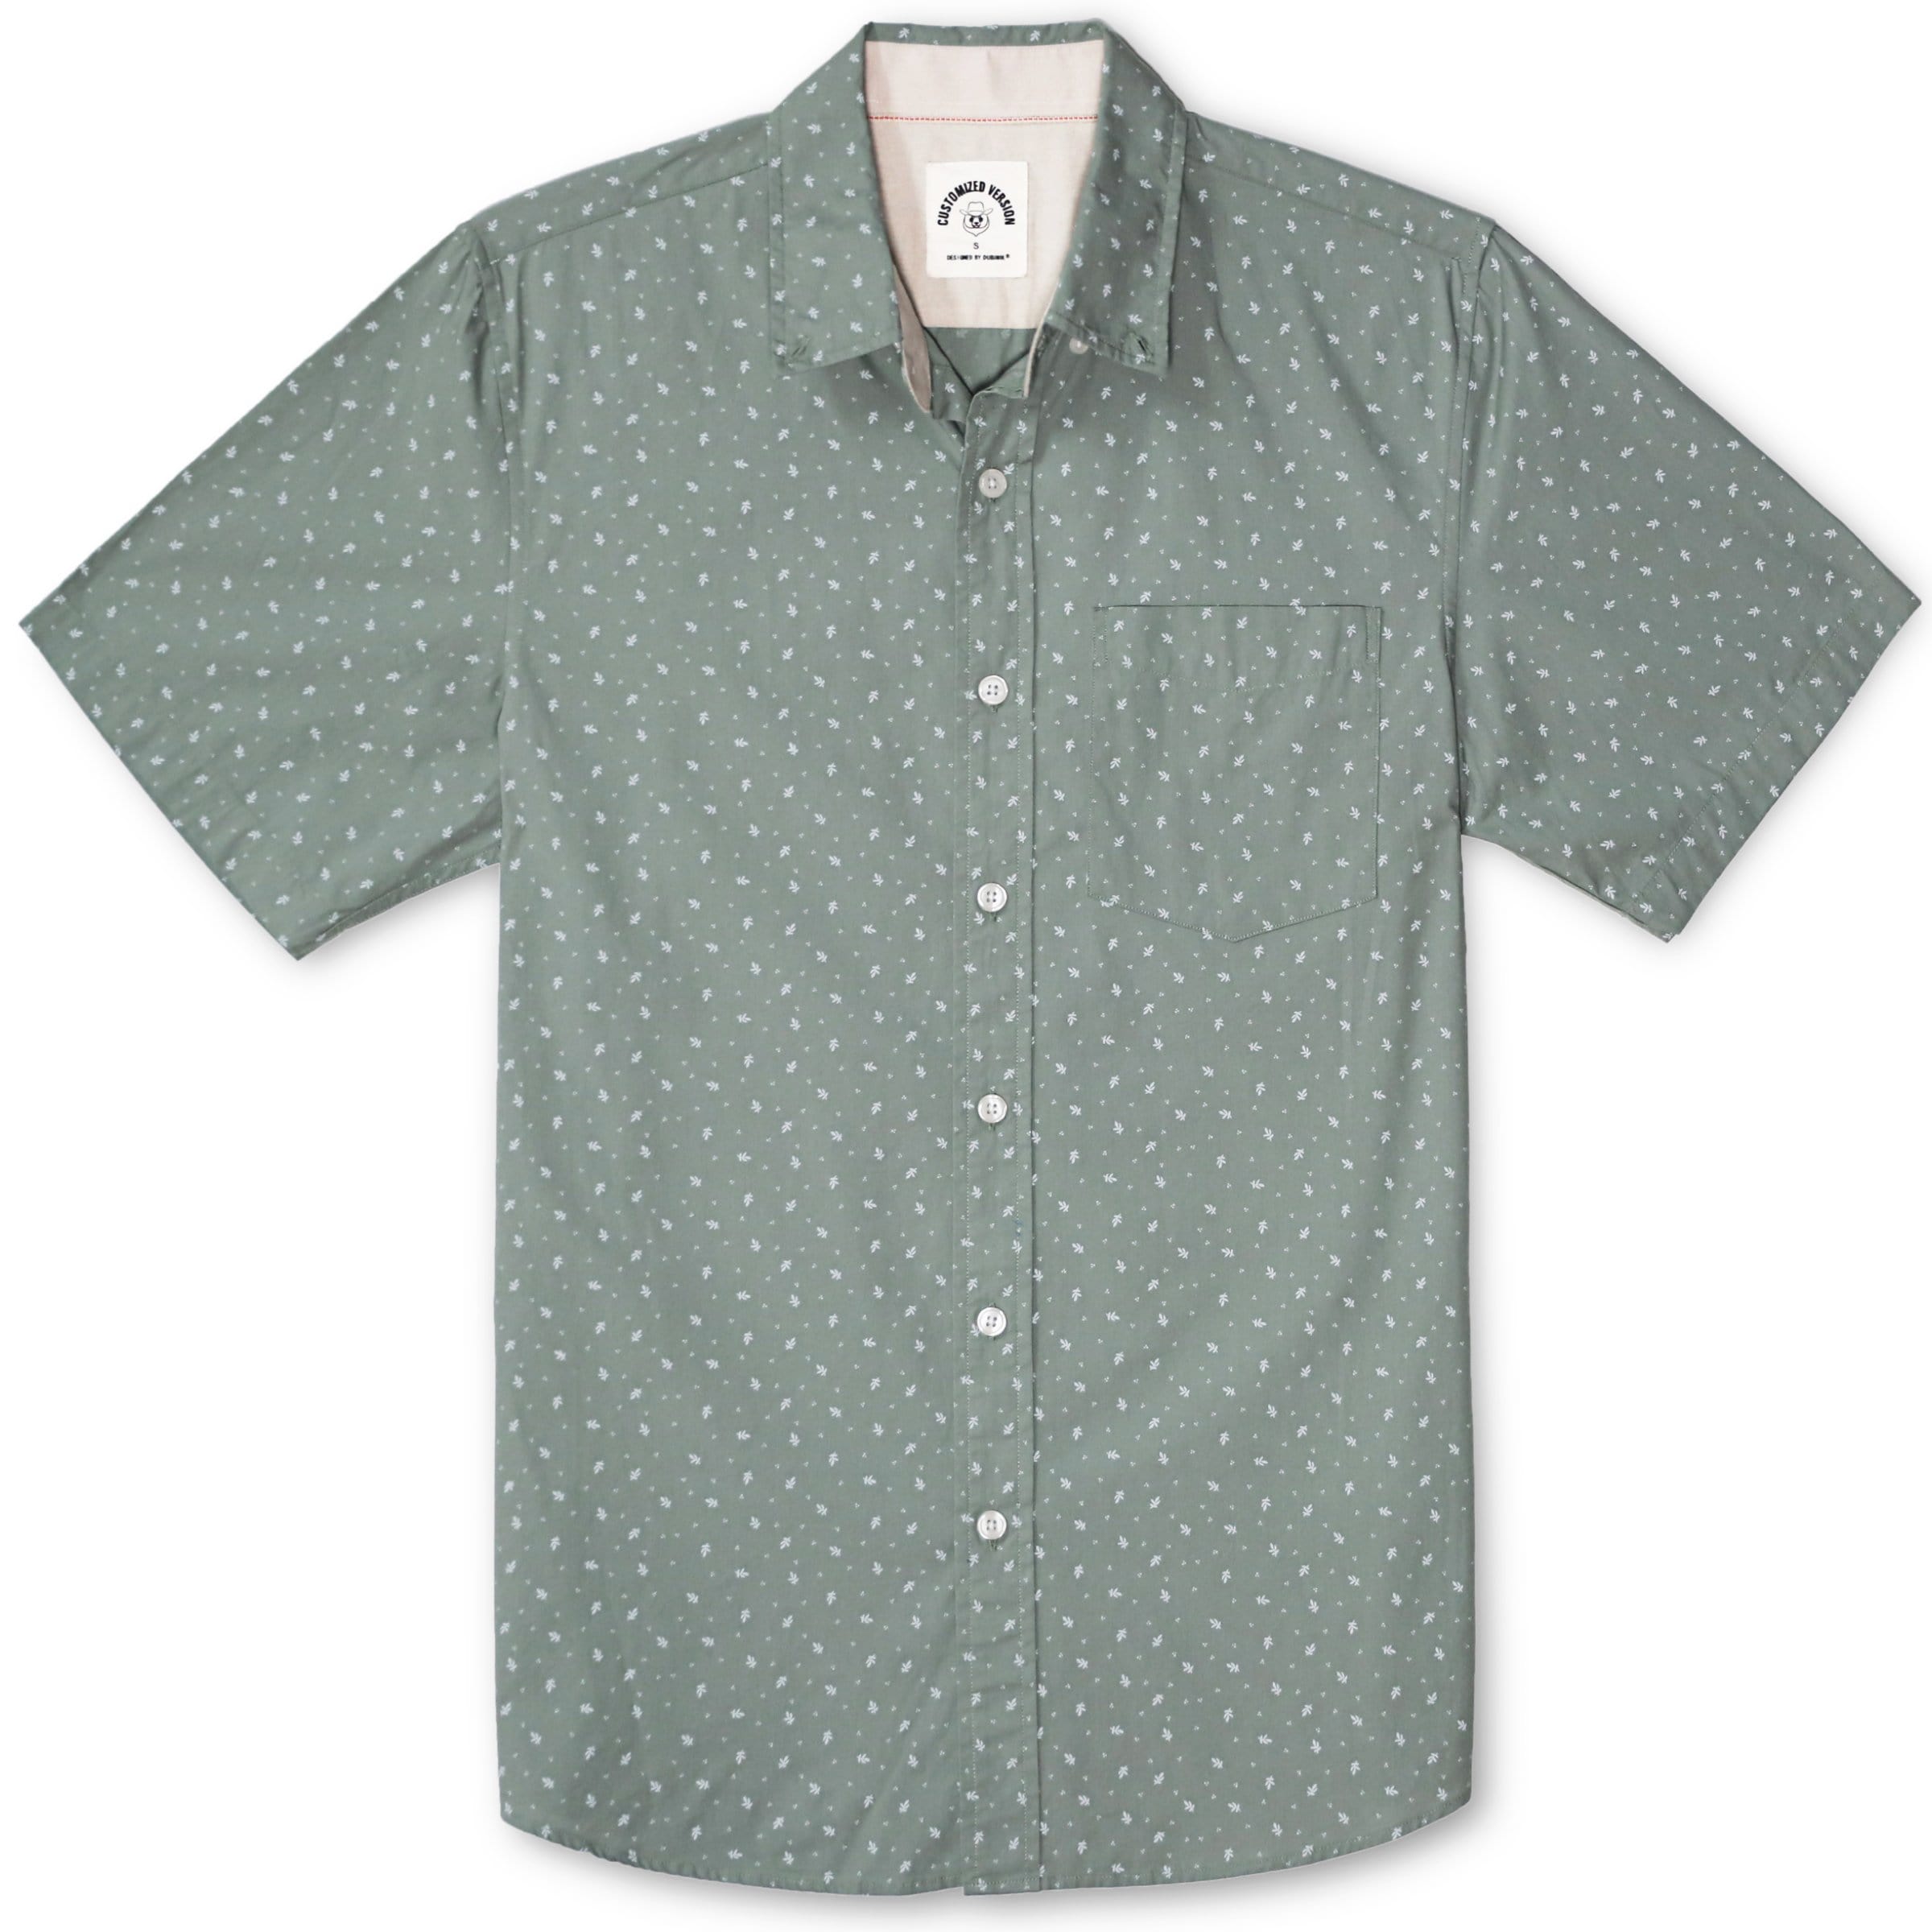 Men's casual short-sleeved cotton shirt #0100